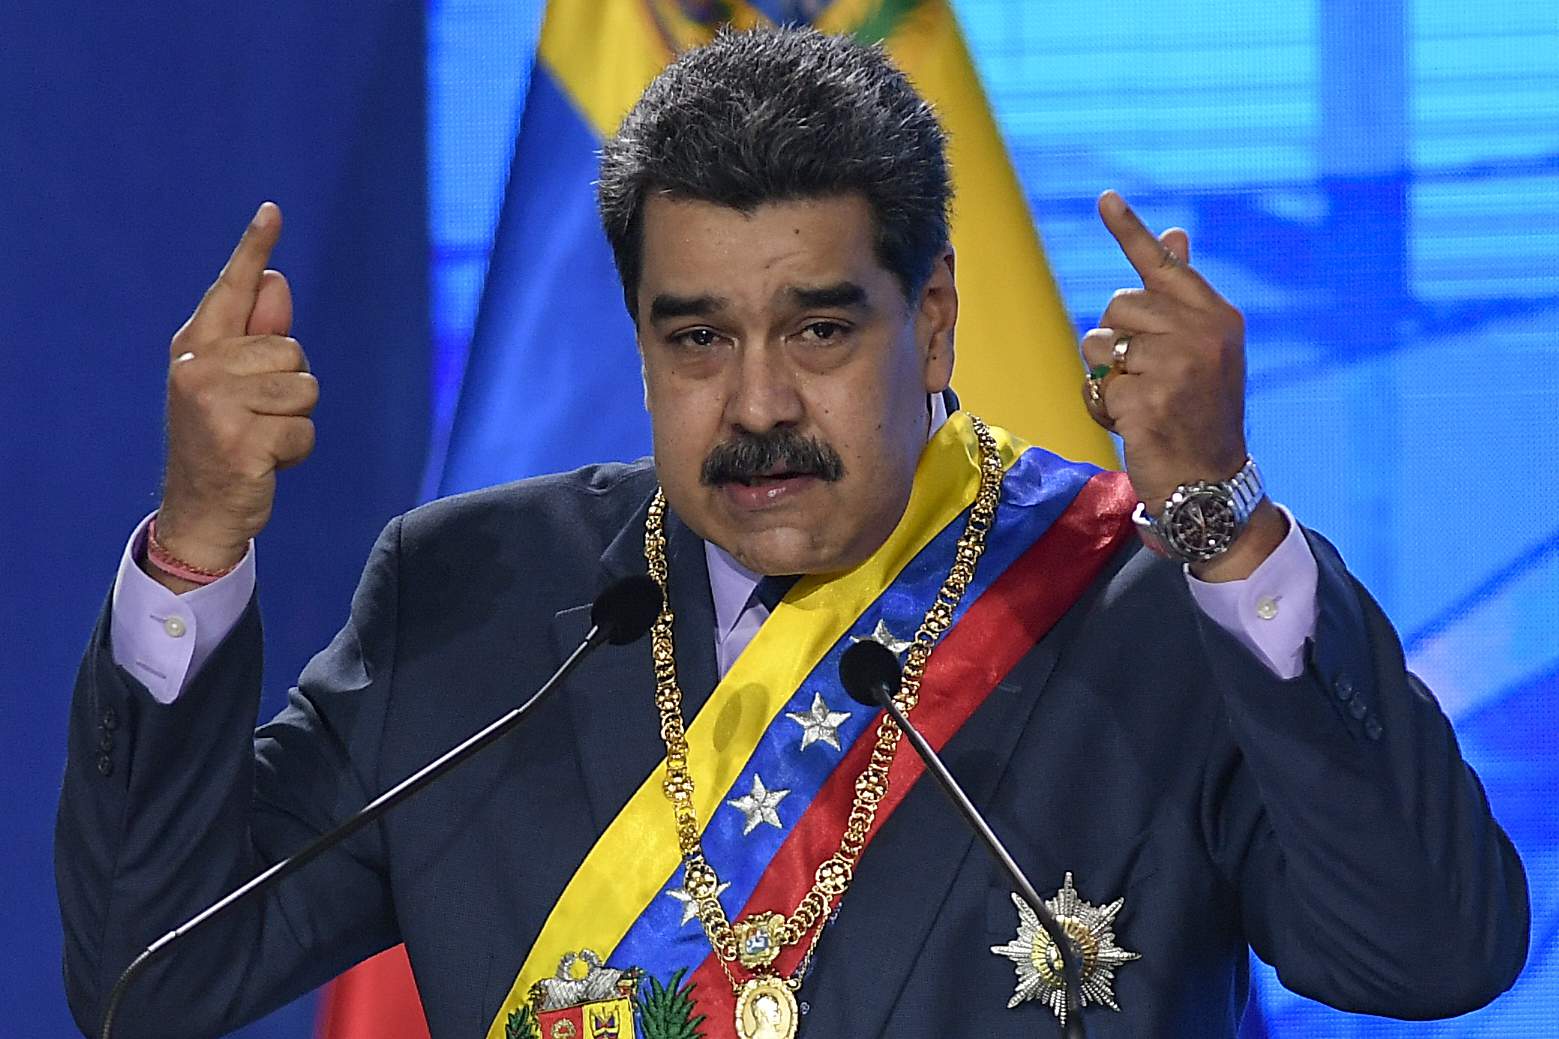 Maduro's 'miracle' treatment for COVID-19 draws skeptics